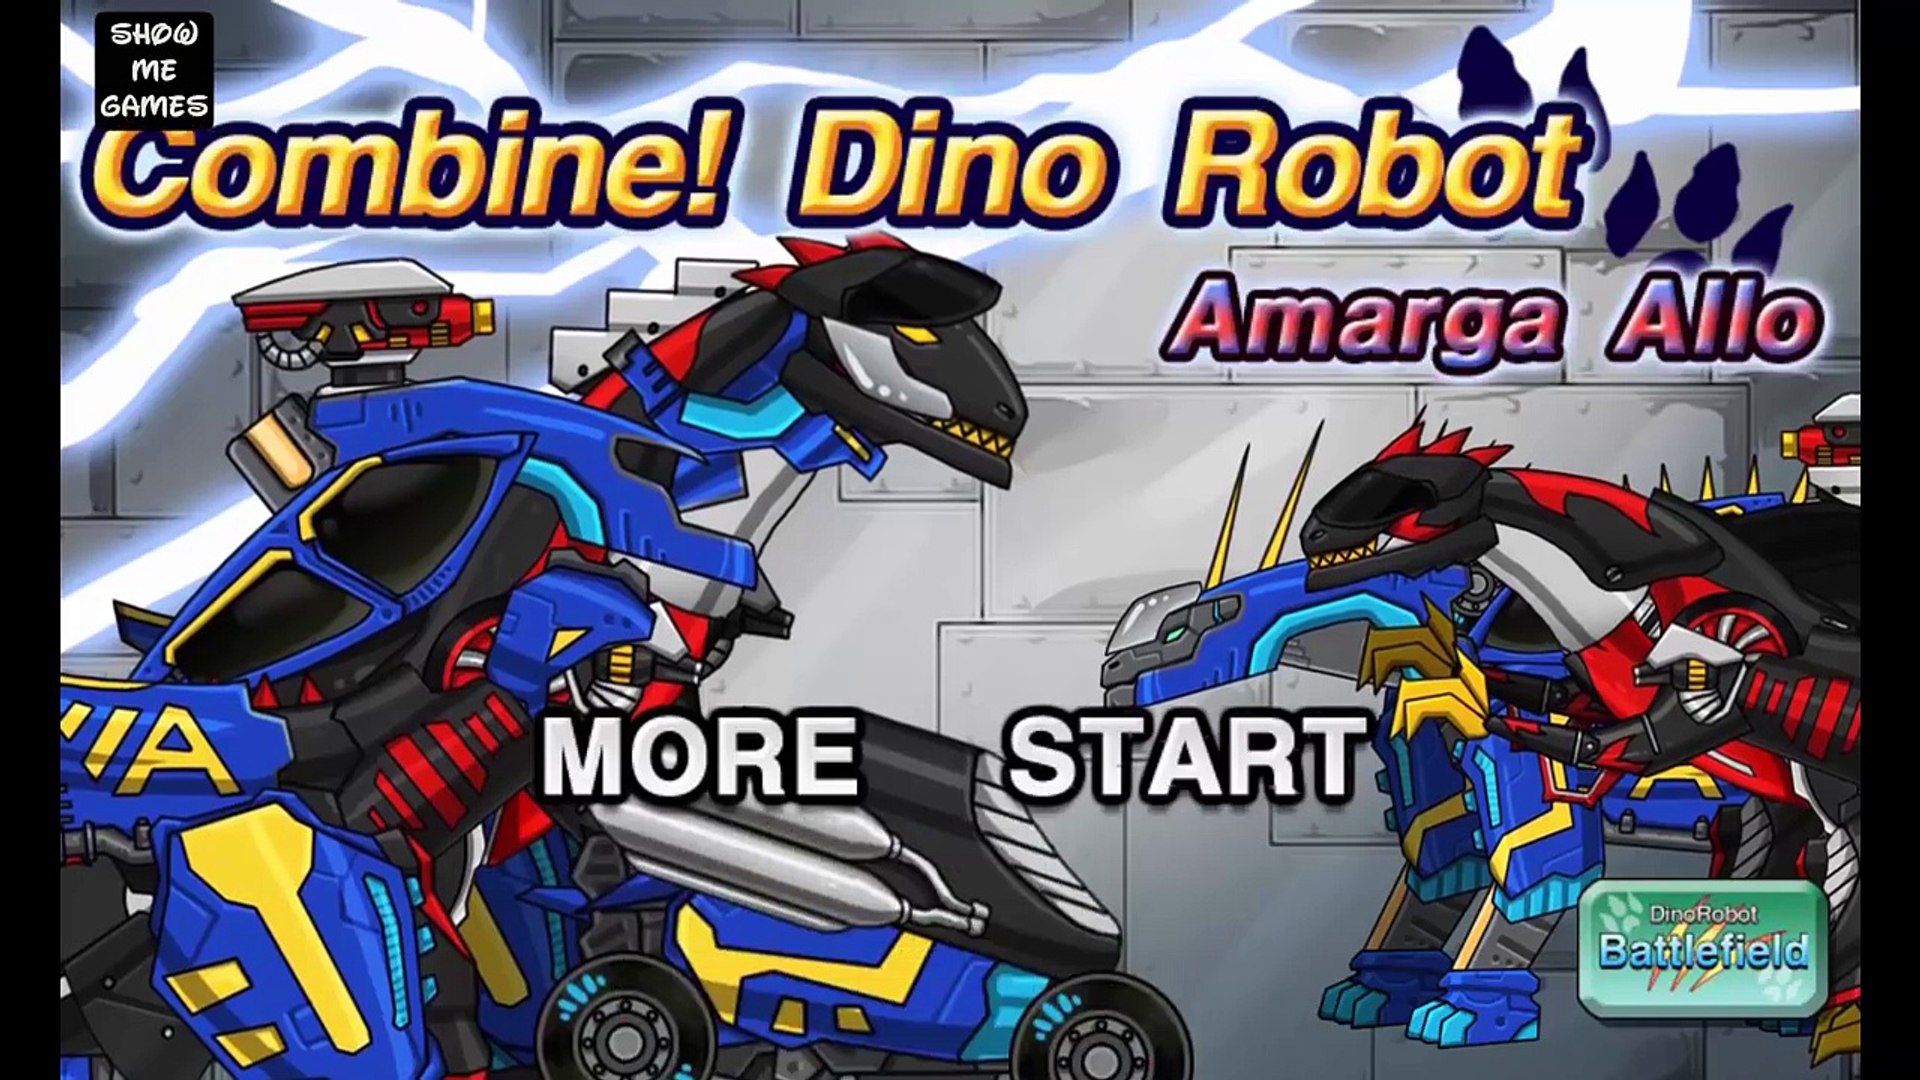 Amarga Allo Dino Robot - ِAndroid Game Play 1080 HD 2016 Game Show – Видео  Dailymotion